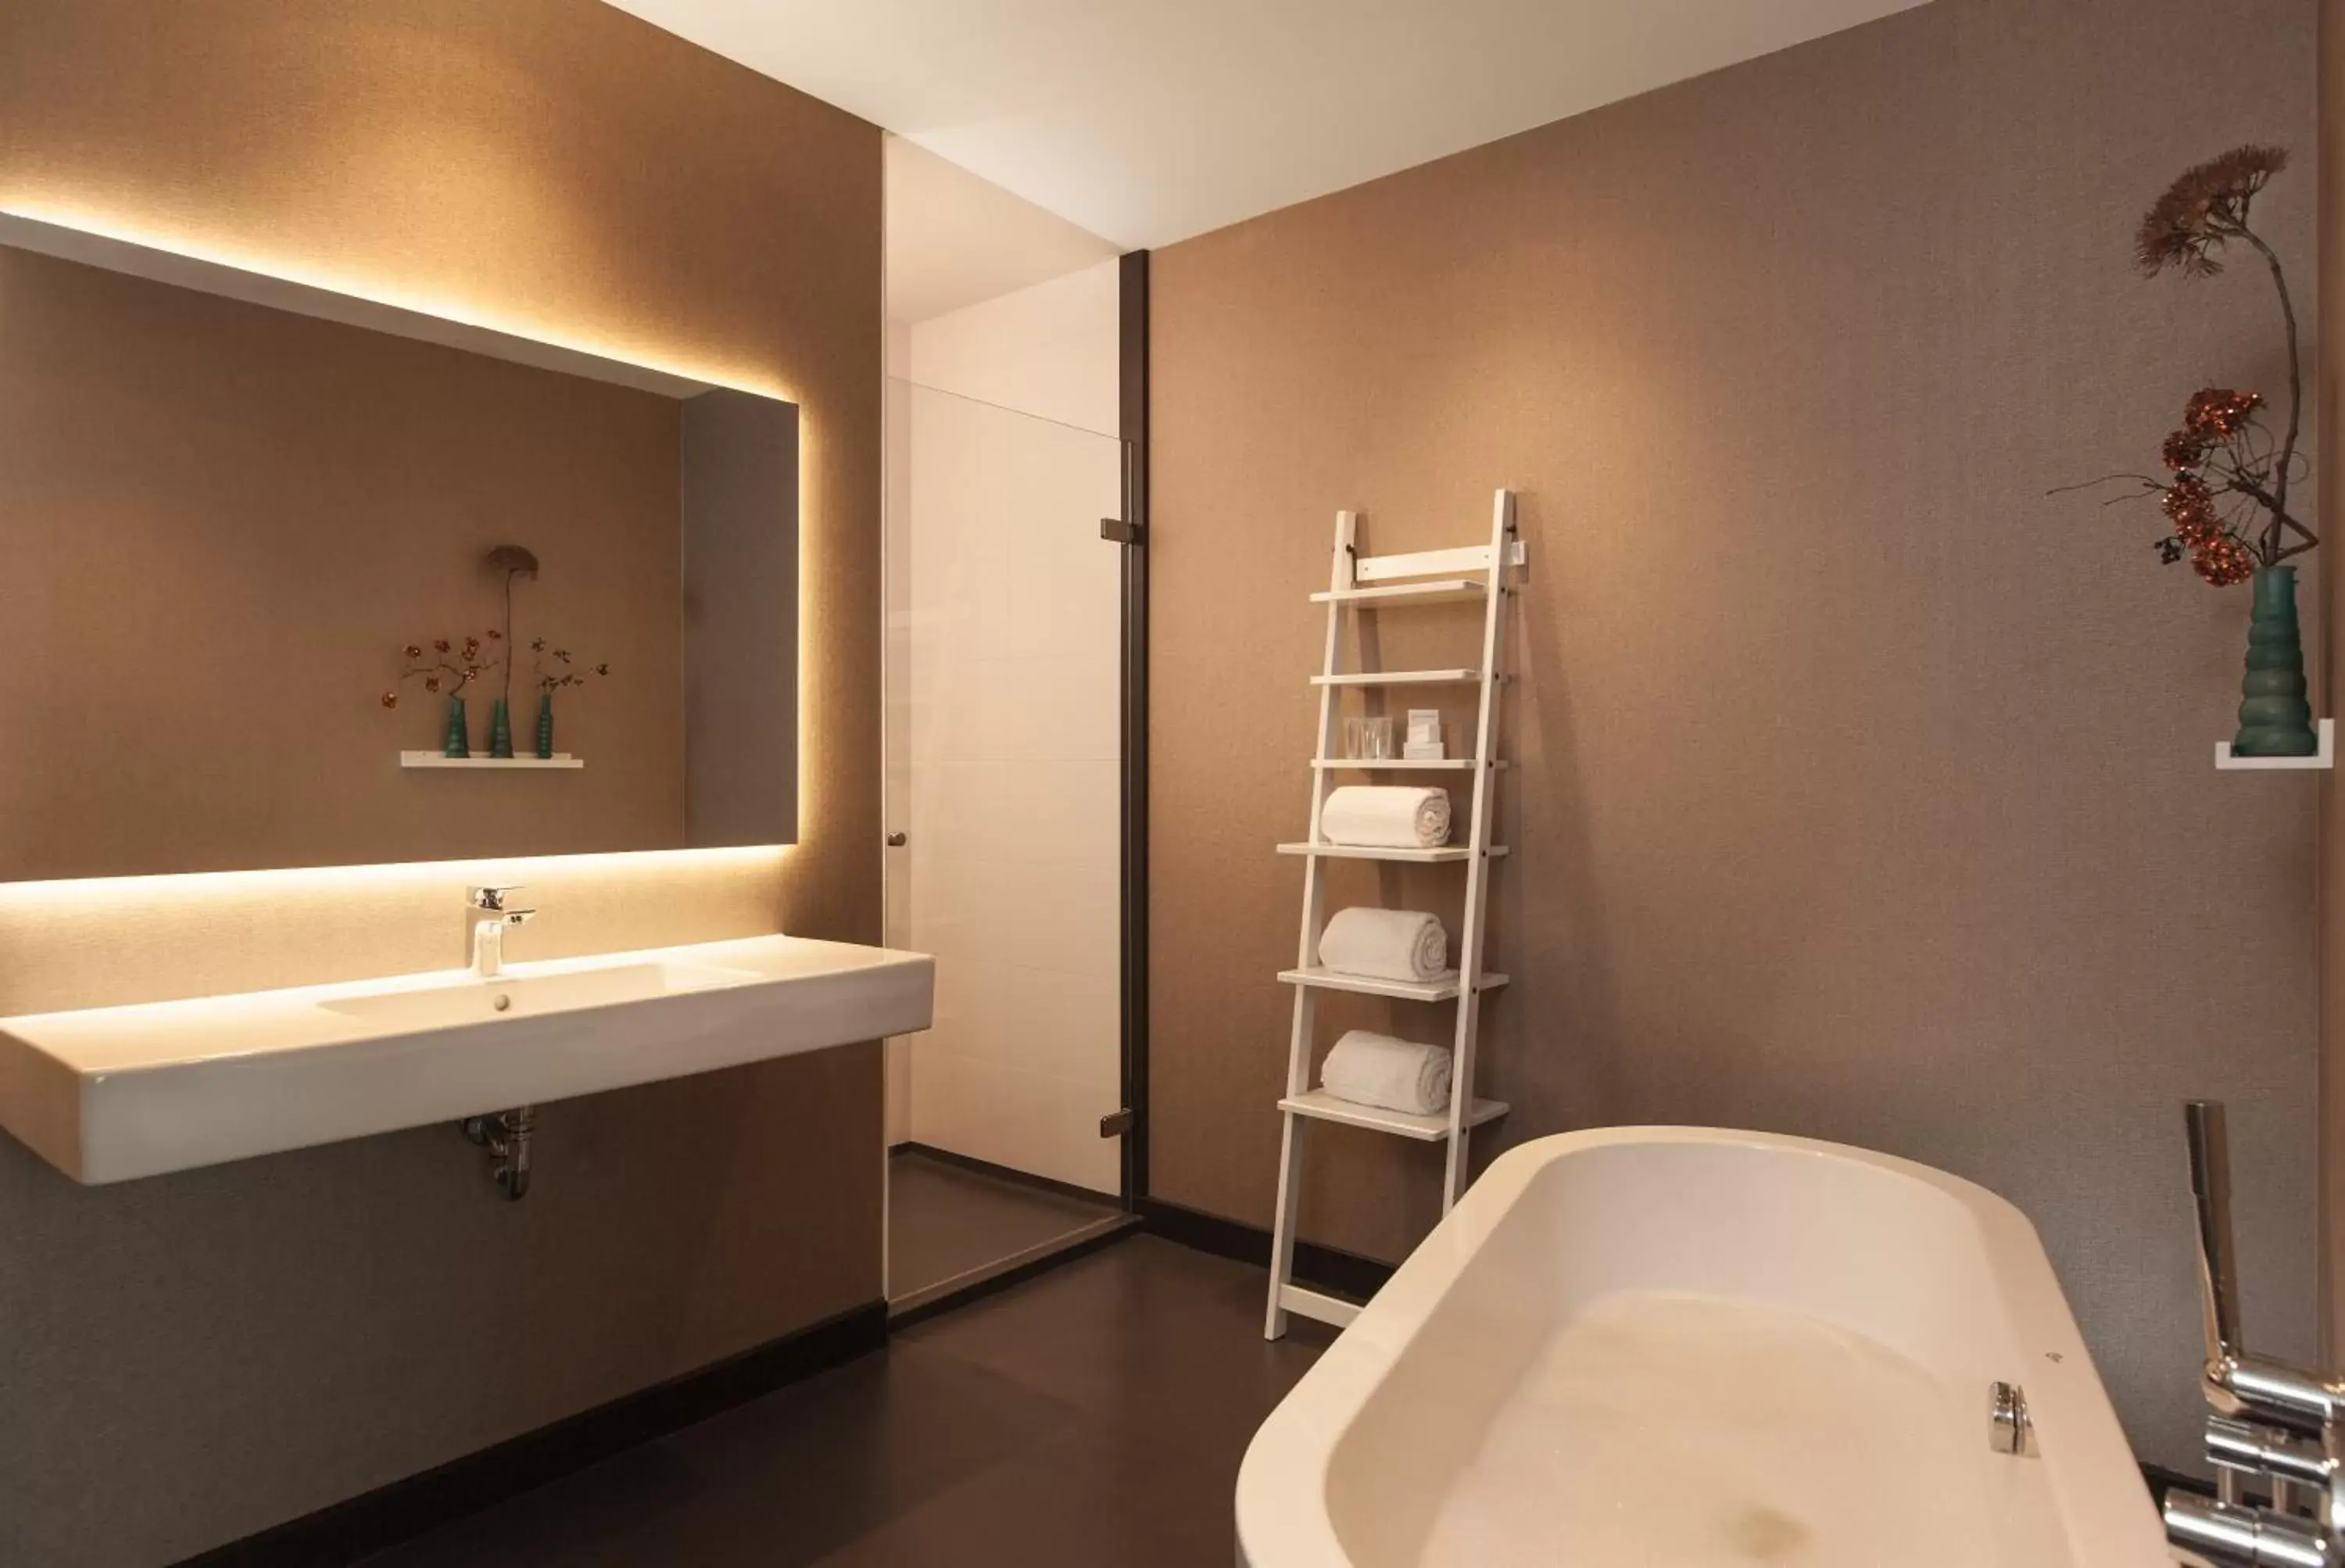 Bathroom in Van der Valk hotel Veenendaal